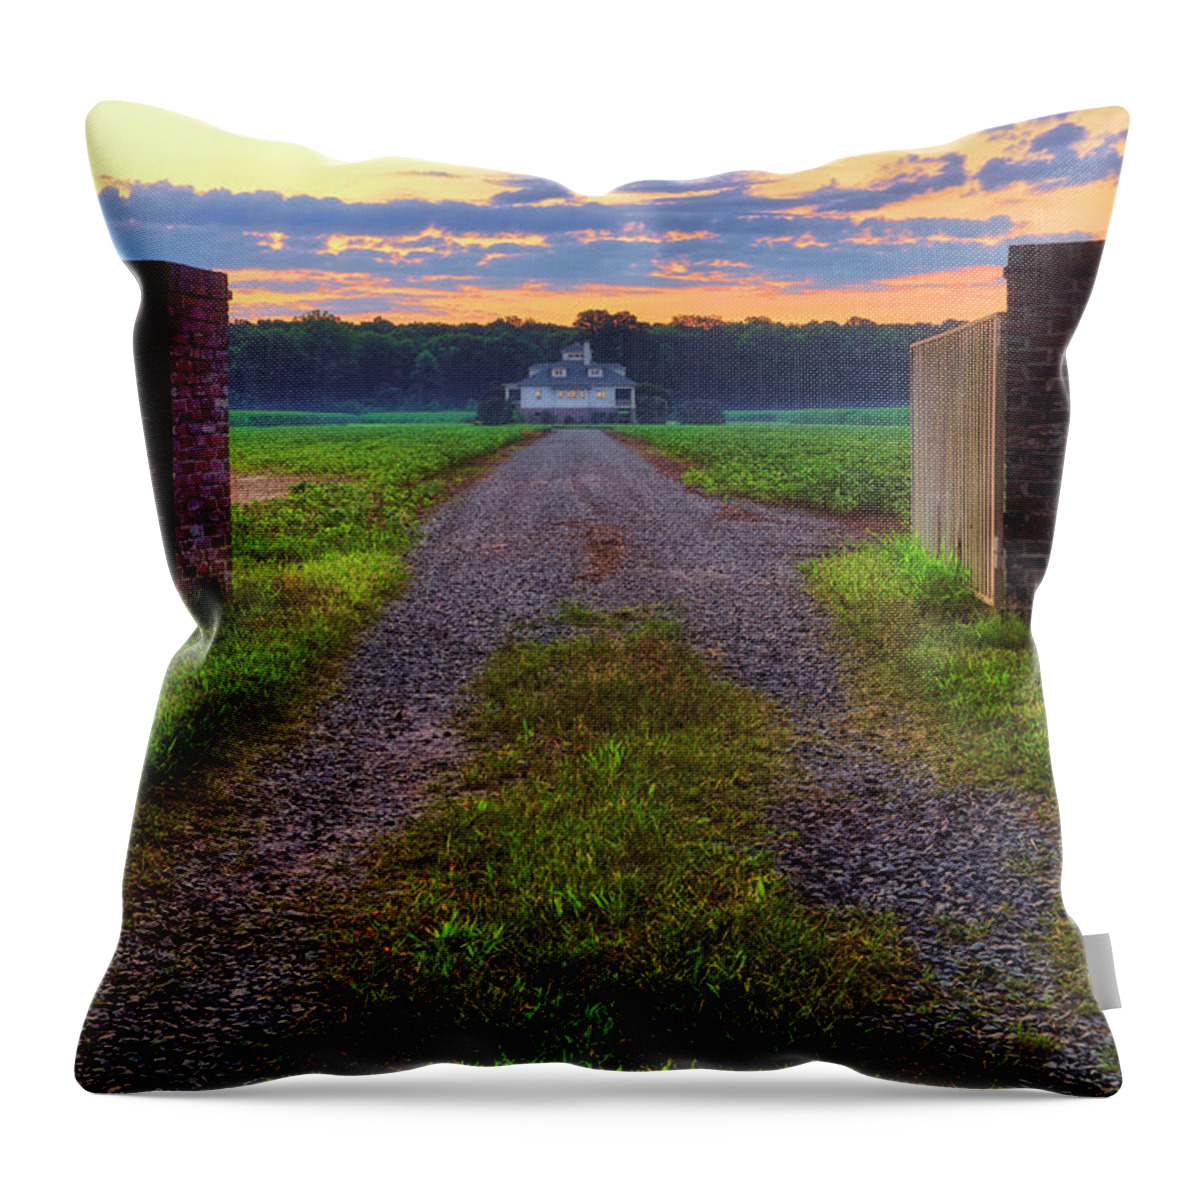 Farmhouse Throw Pillow featuring the photograph Farmhouse Sunrise - Arkansas - Landscape by Jason Politte